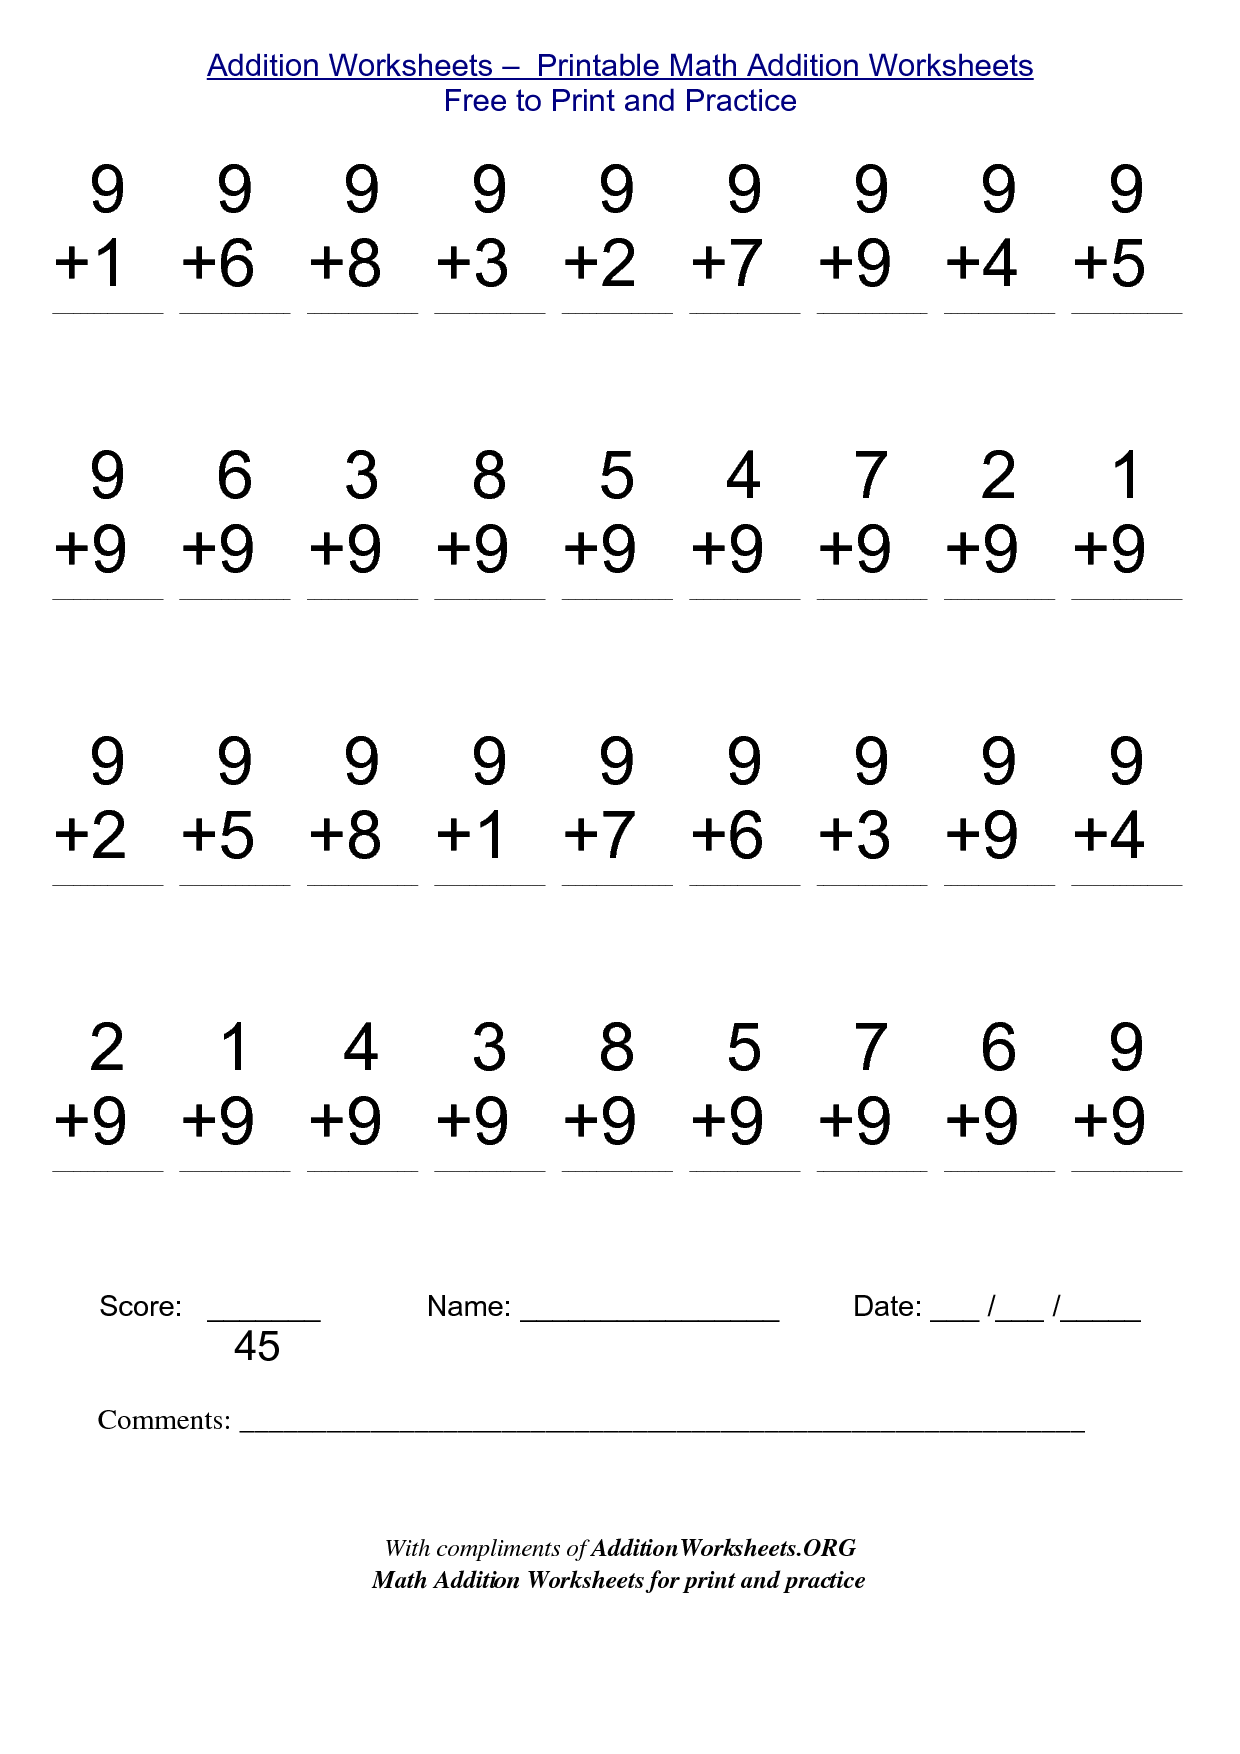 Free 2nd Grade Math Worksheets Image